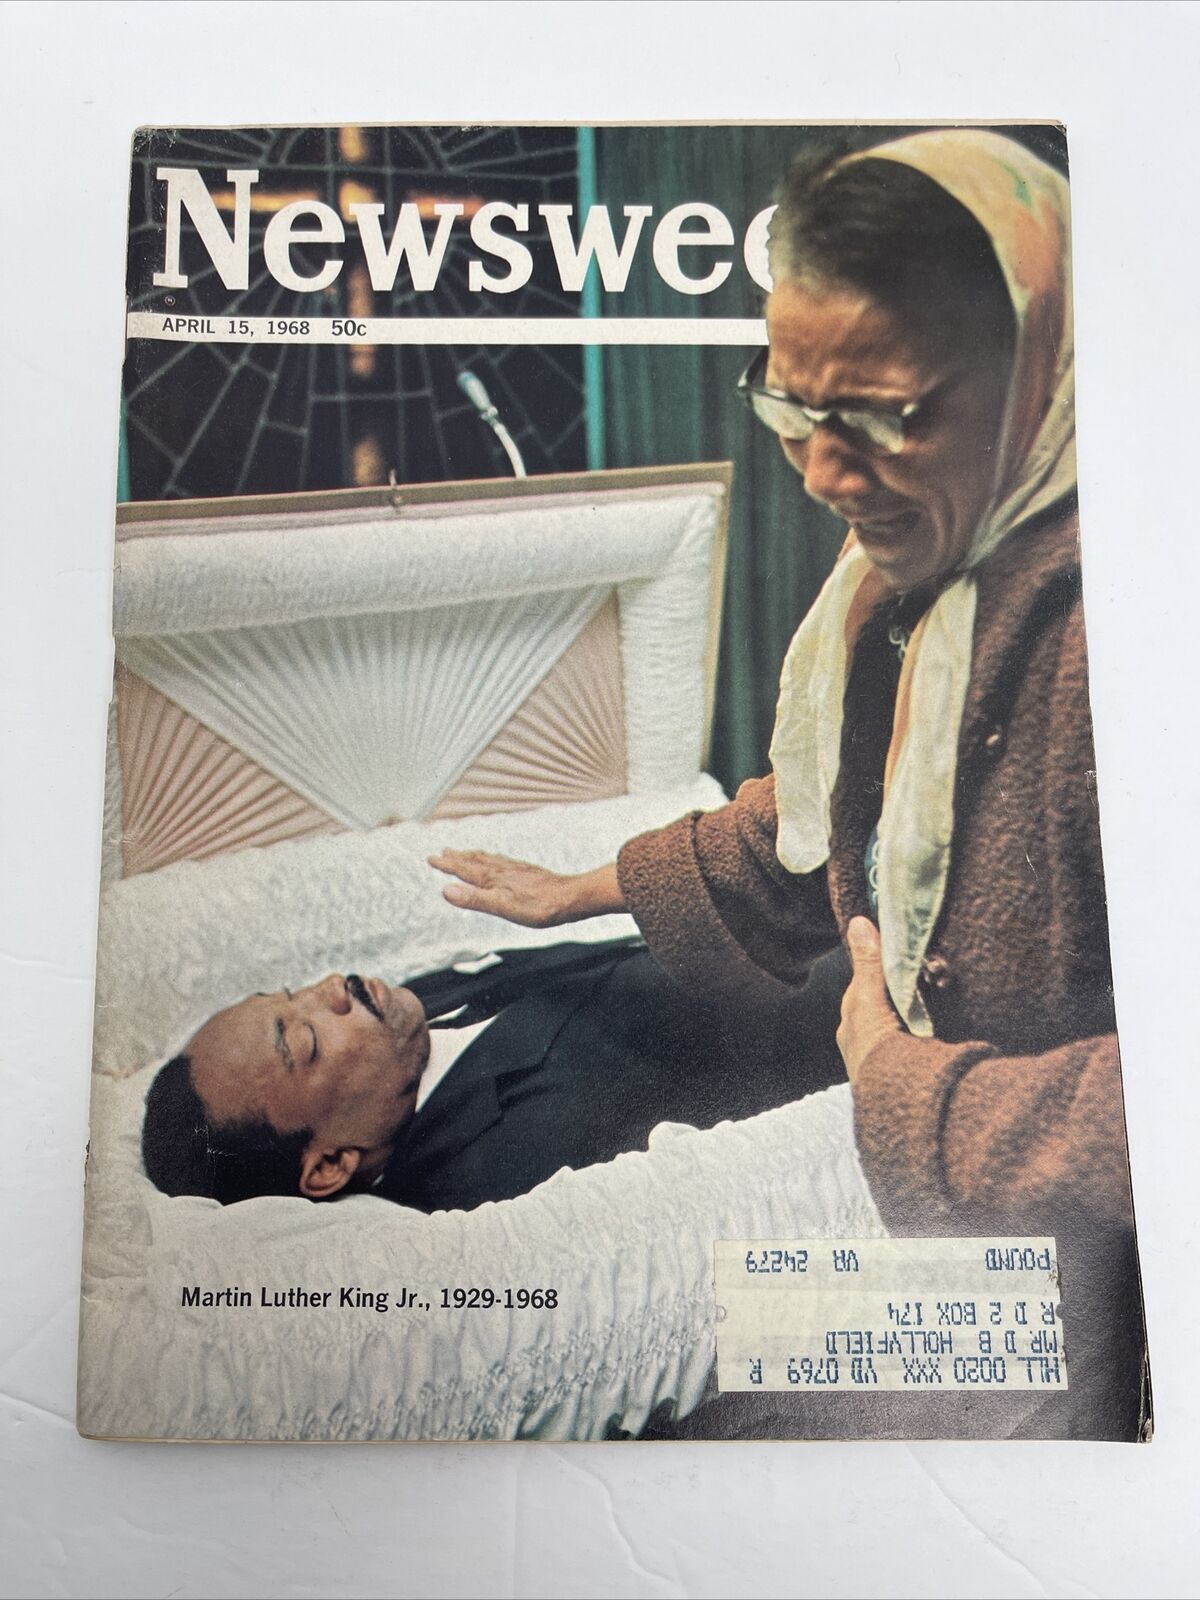 Newsweek Magazine April 15 1968 Martin Luther King Jr. 1929 - 1968 Death of Hero